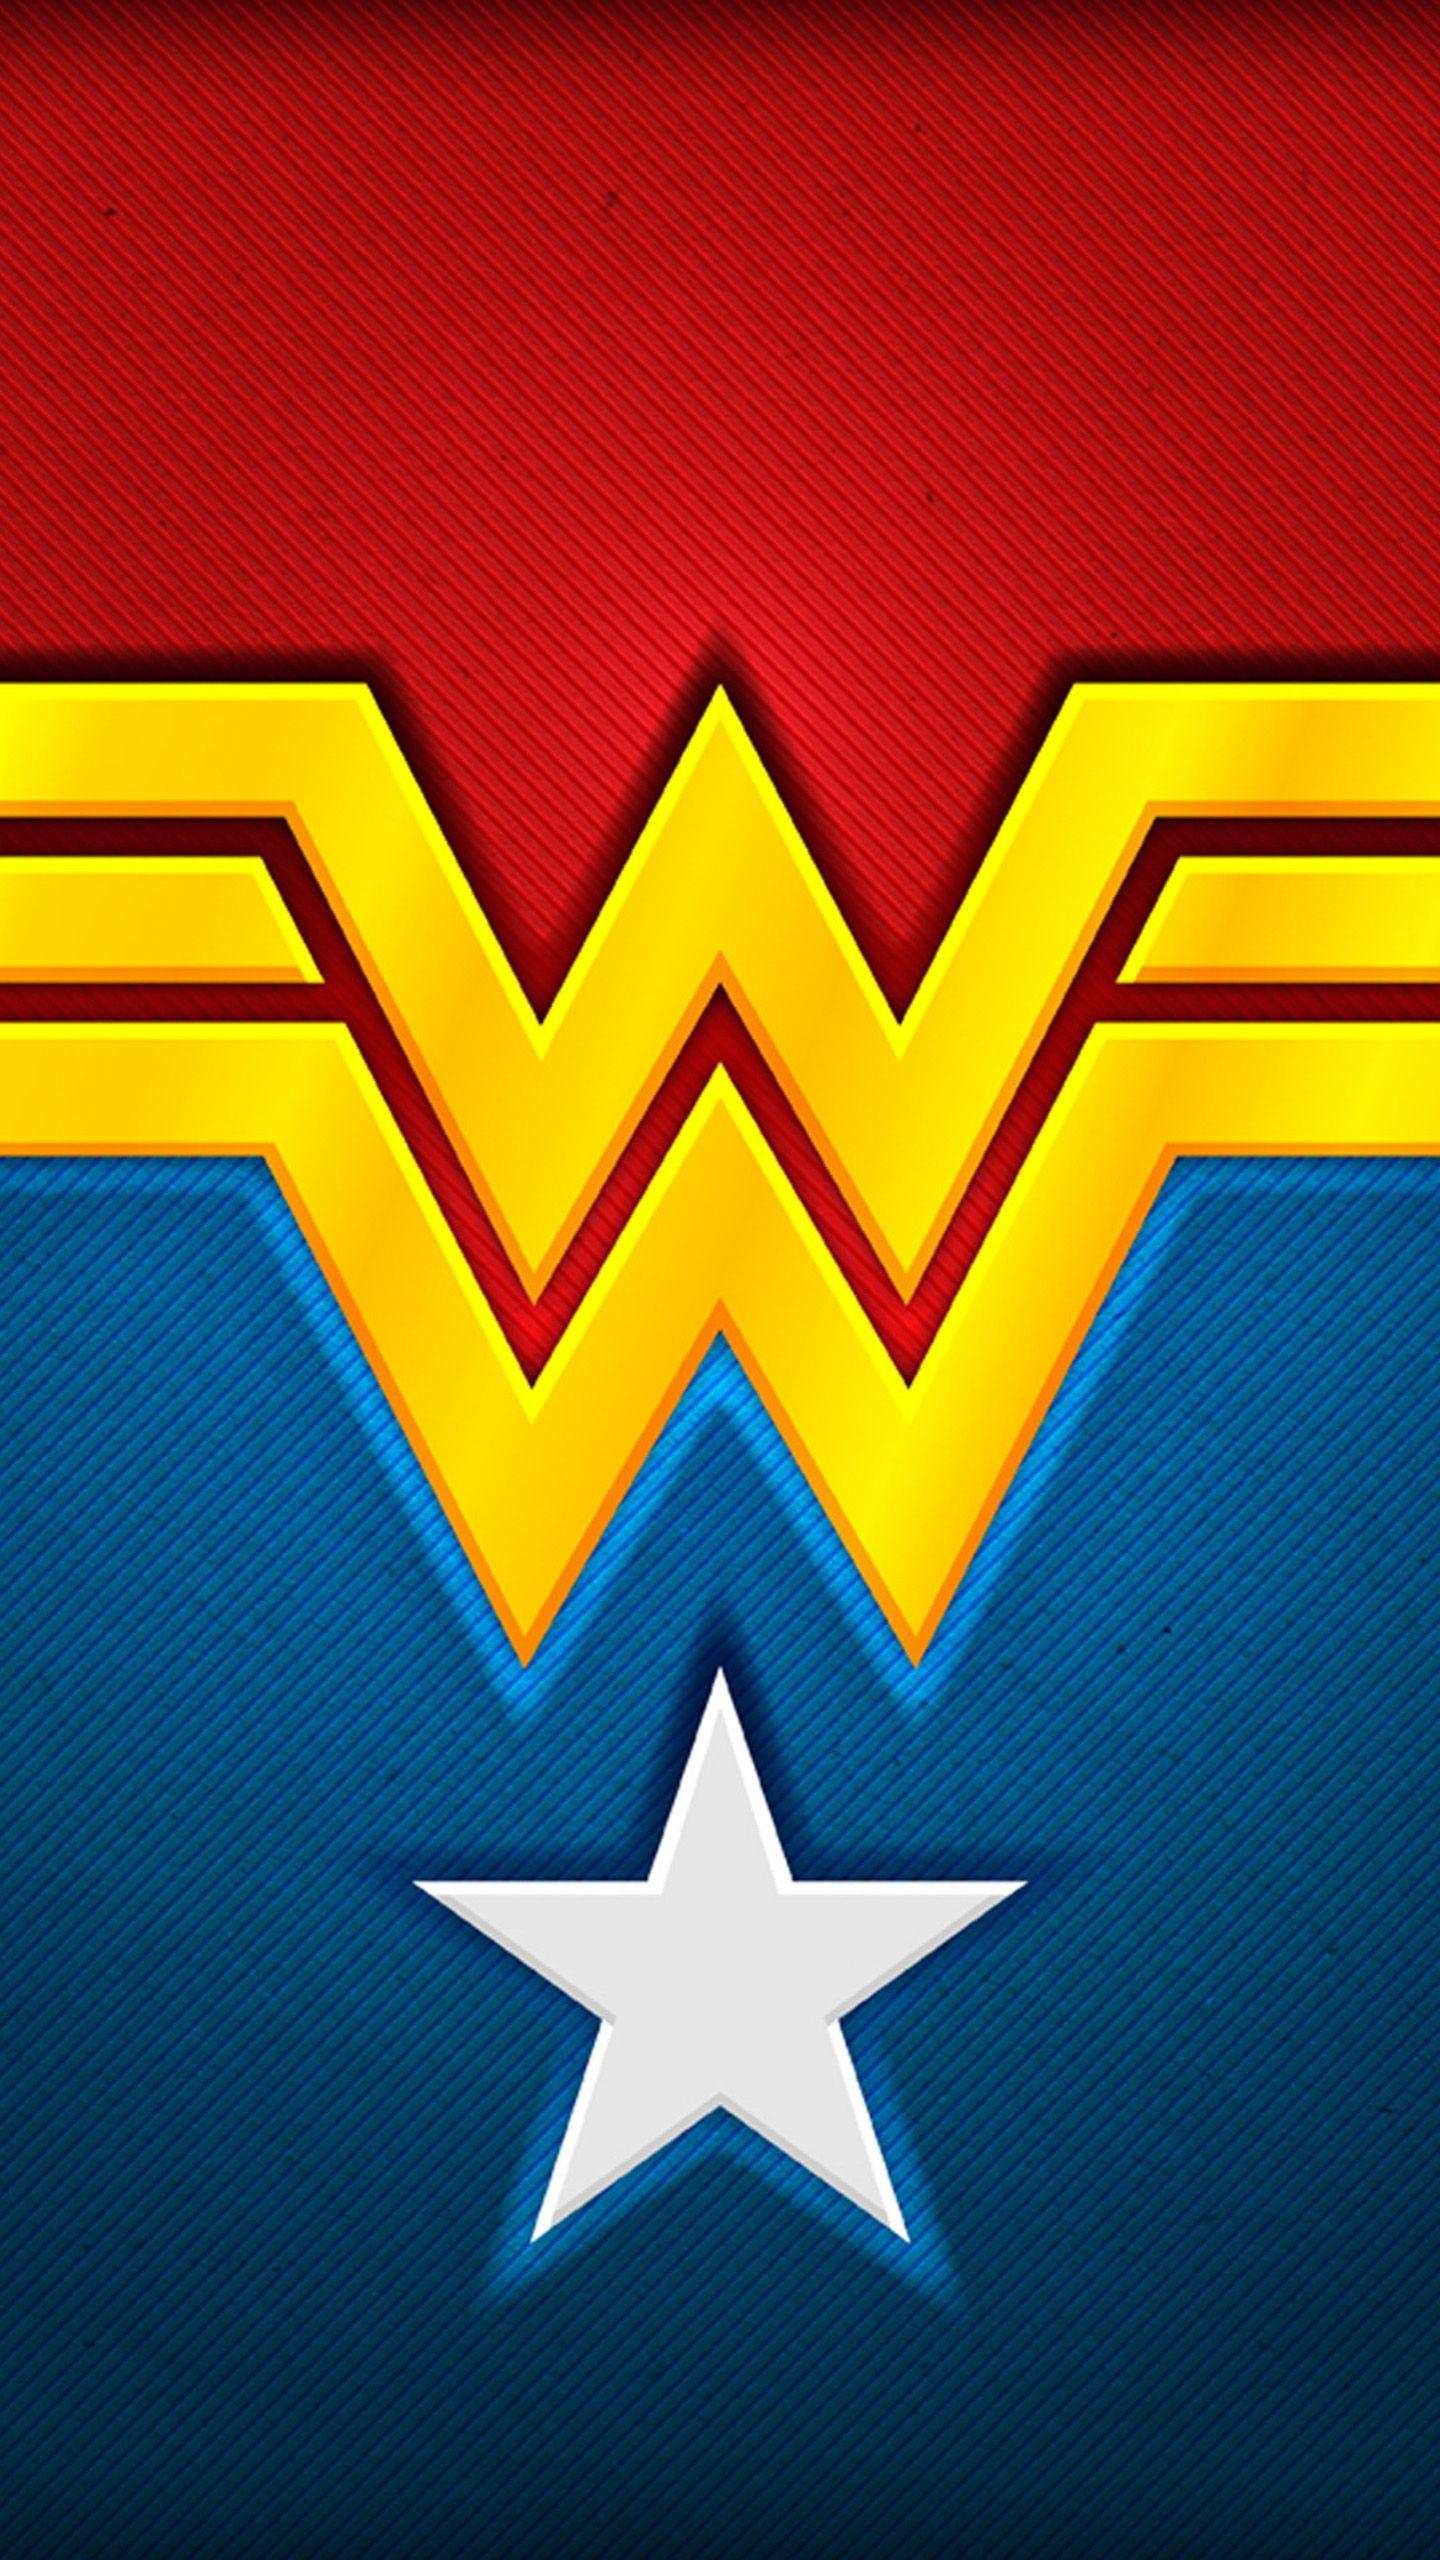 Wonder Woman wallpaper for galaxy